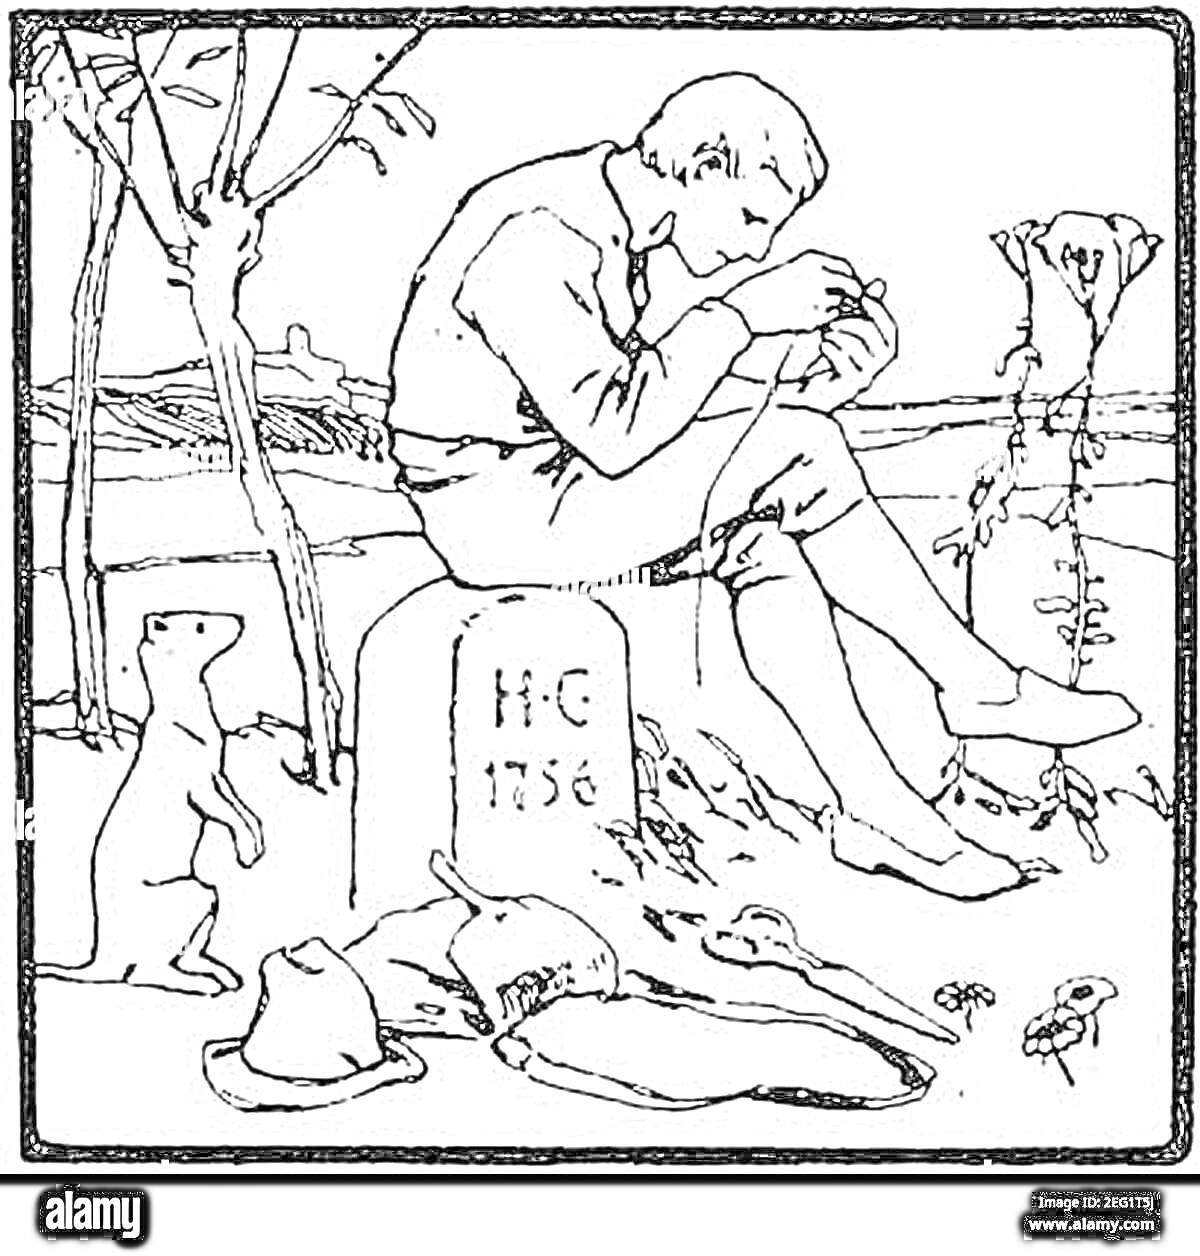 На раскраске изображено: Мужчина, Шляпа, Корзина, Муха, Растения, Пейзаж